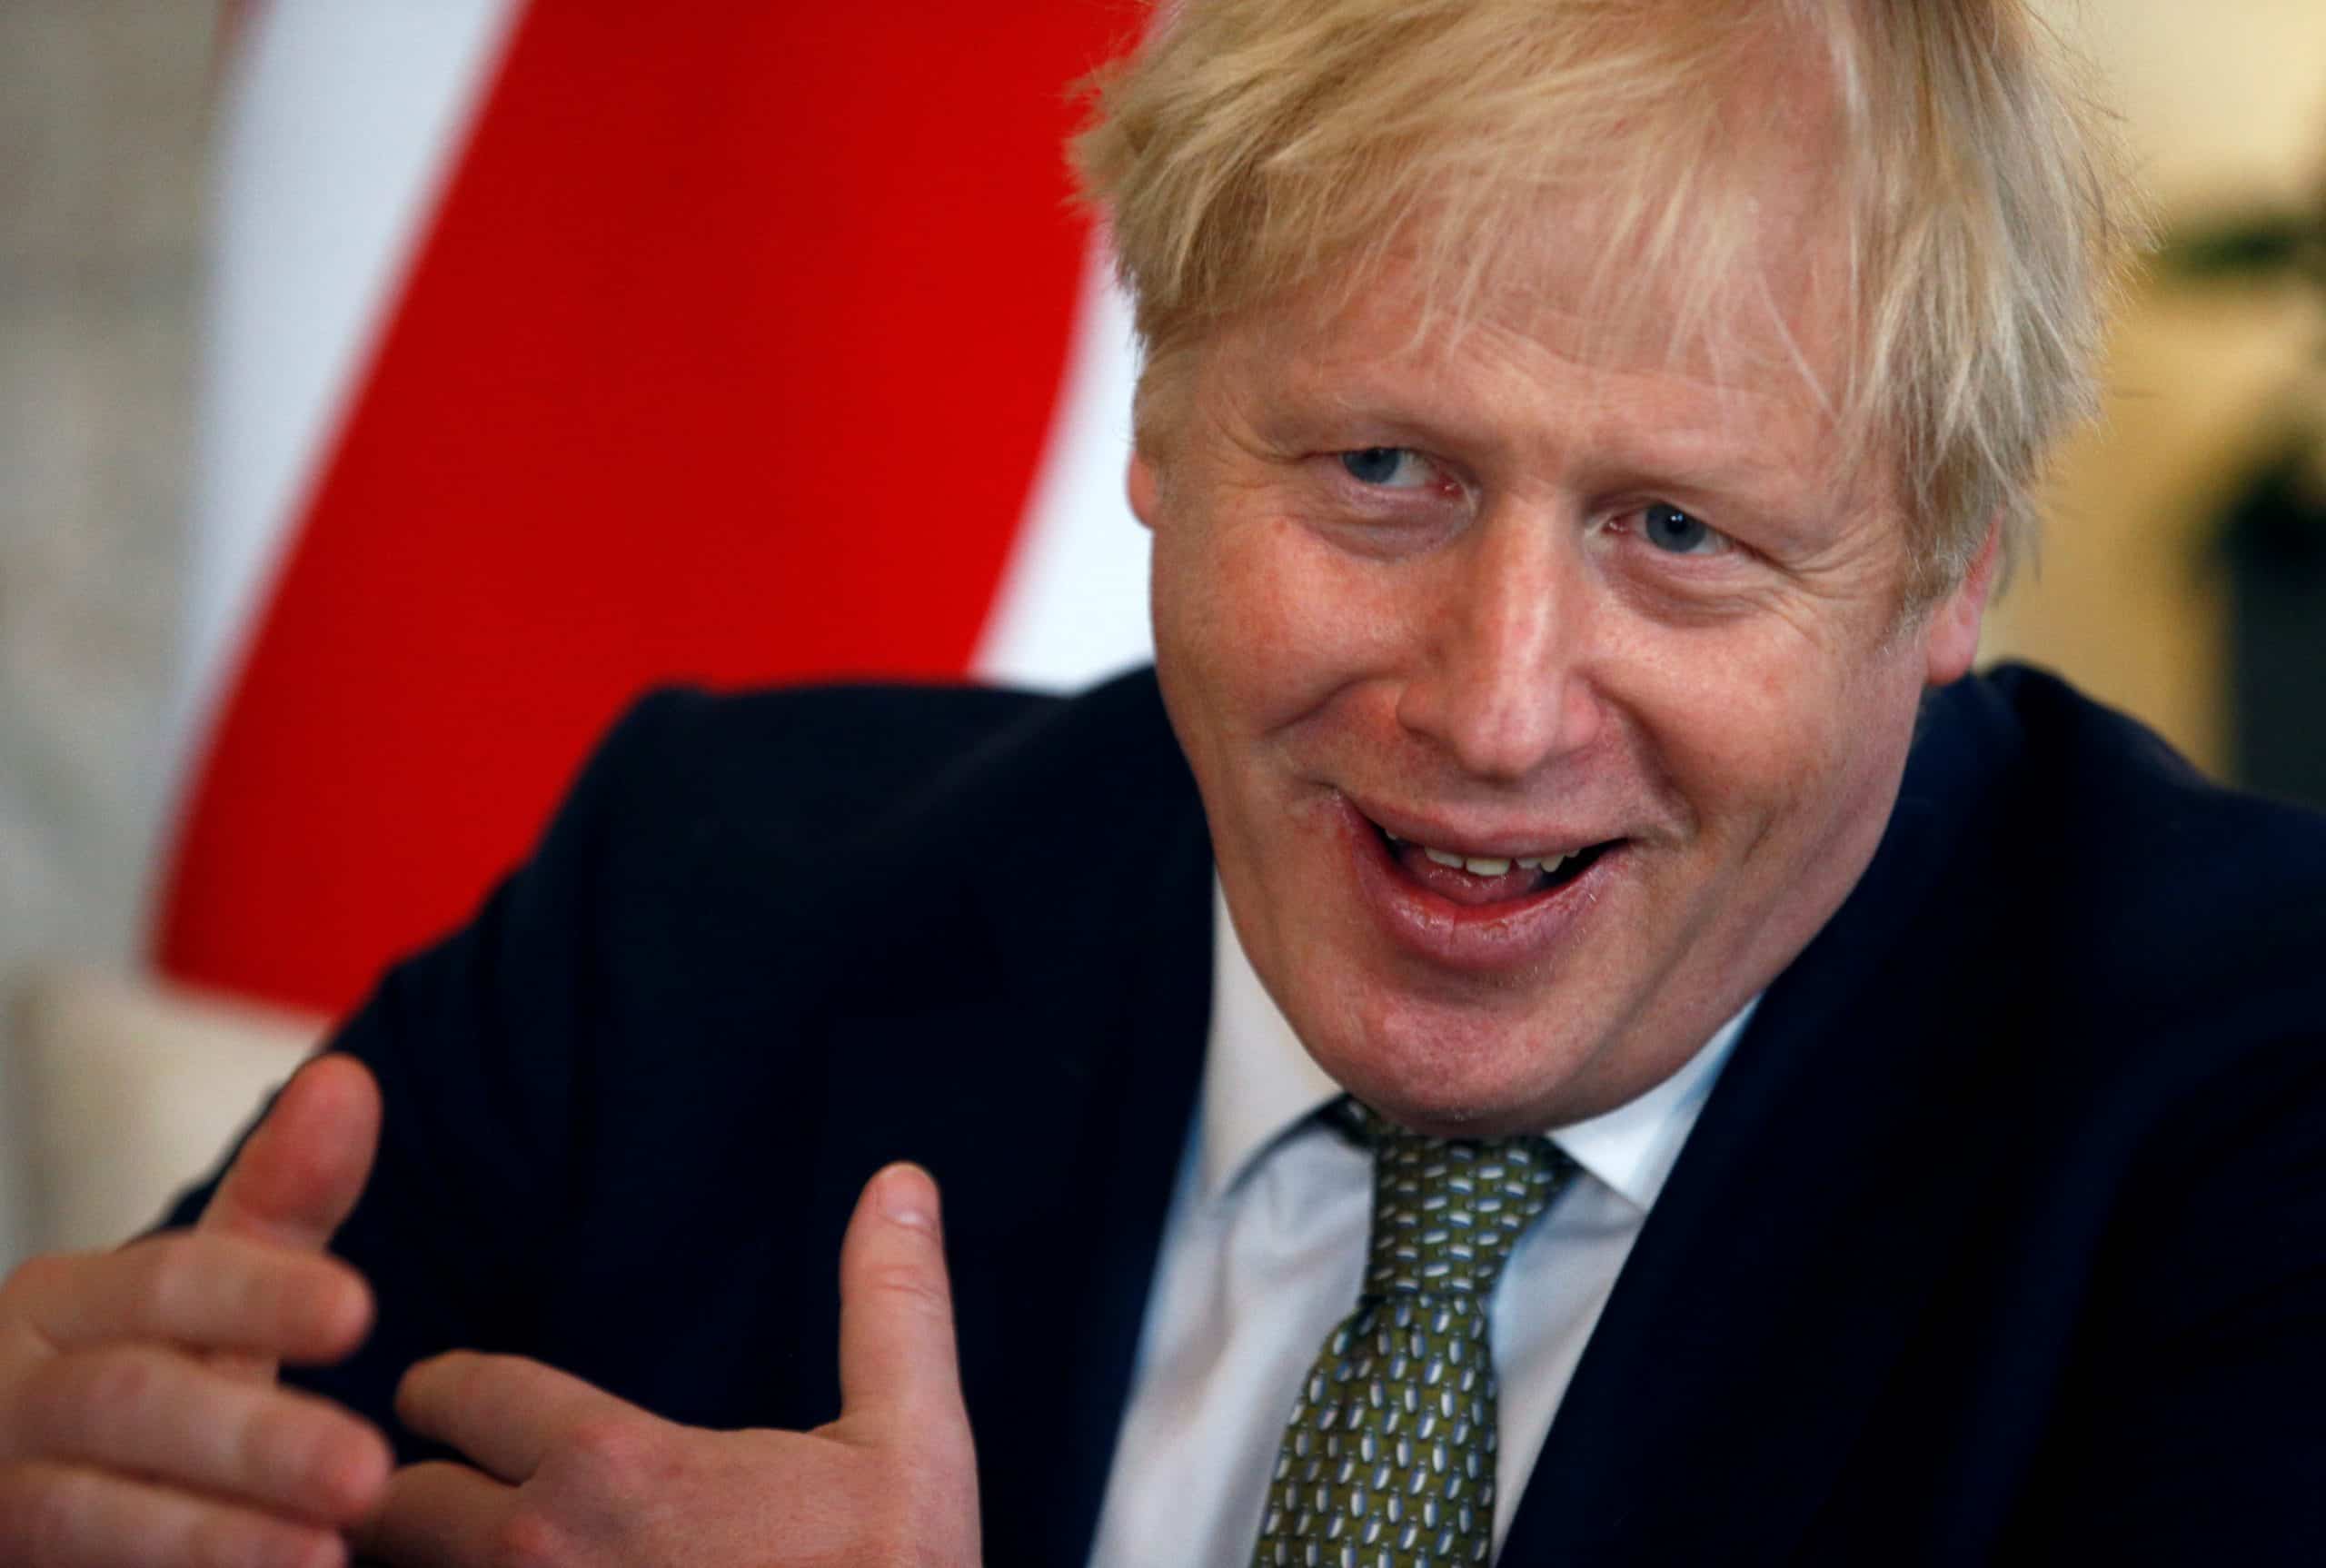 Prepare for No Deal Brexit, Johnson warns Brits